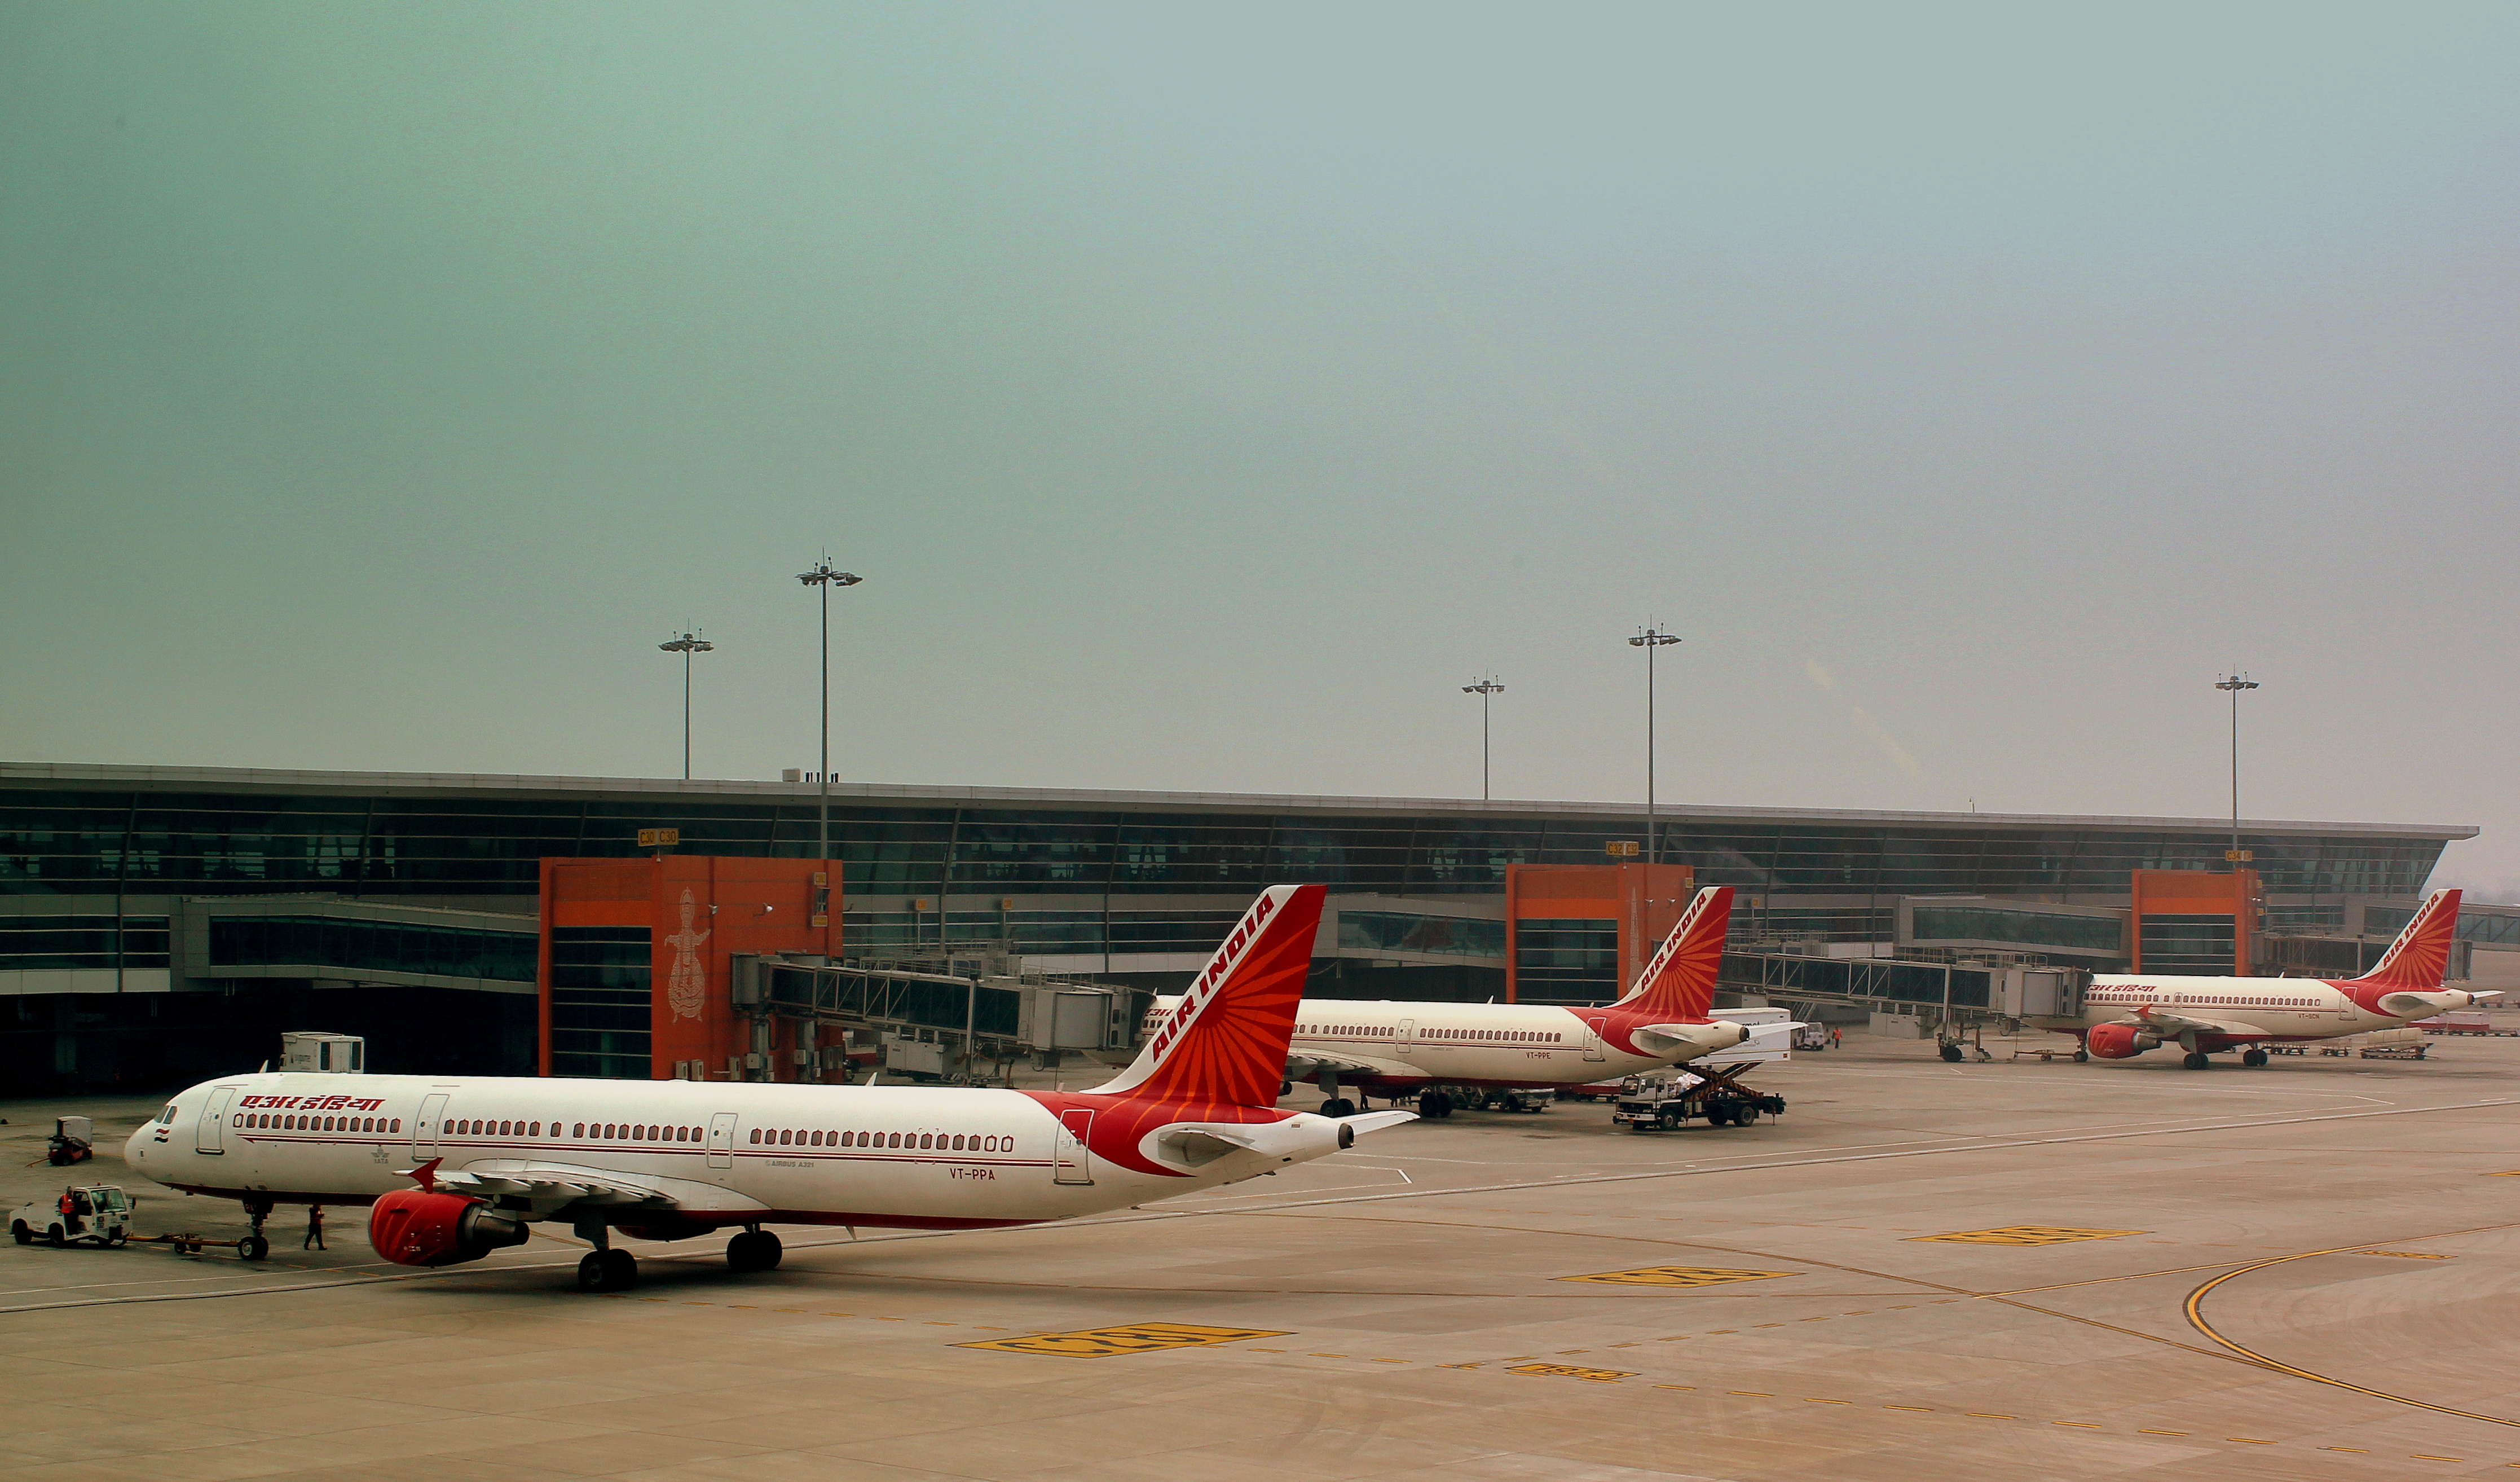 Rajasthan Airport Illustrative